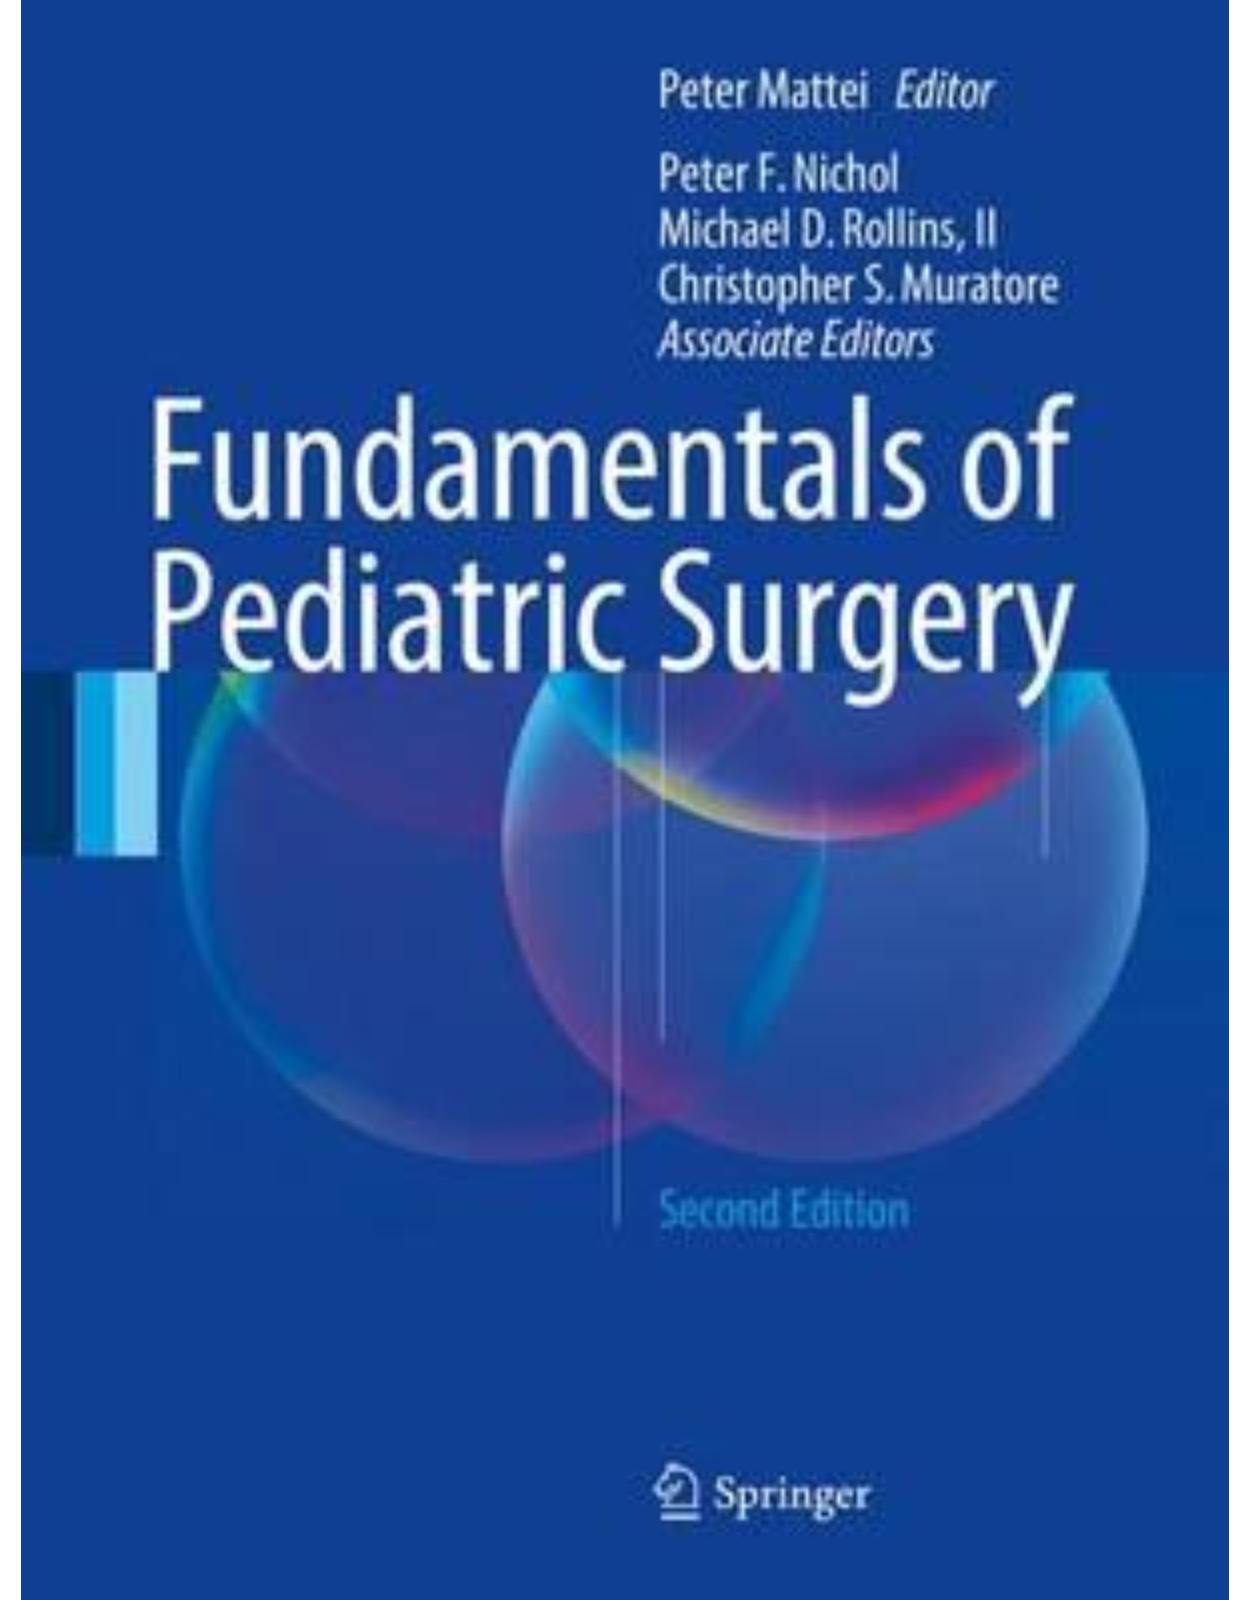 Fundamentals of Pediatric Surgery. Second Edition